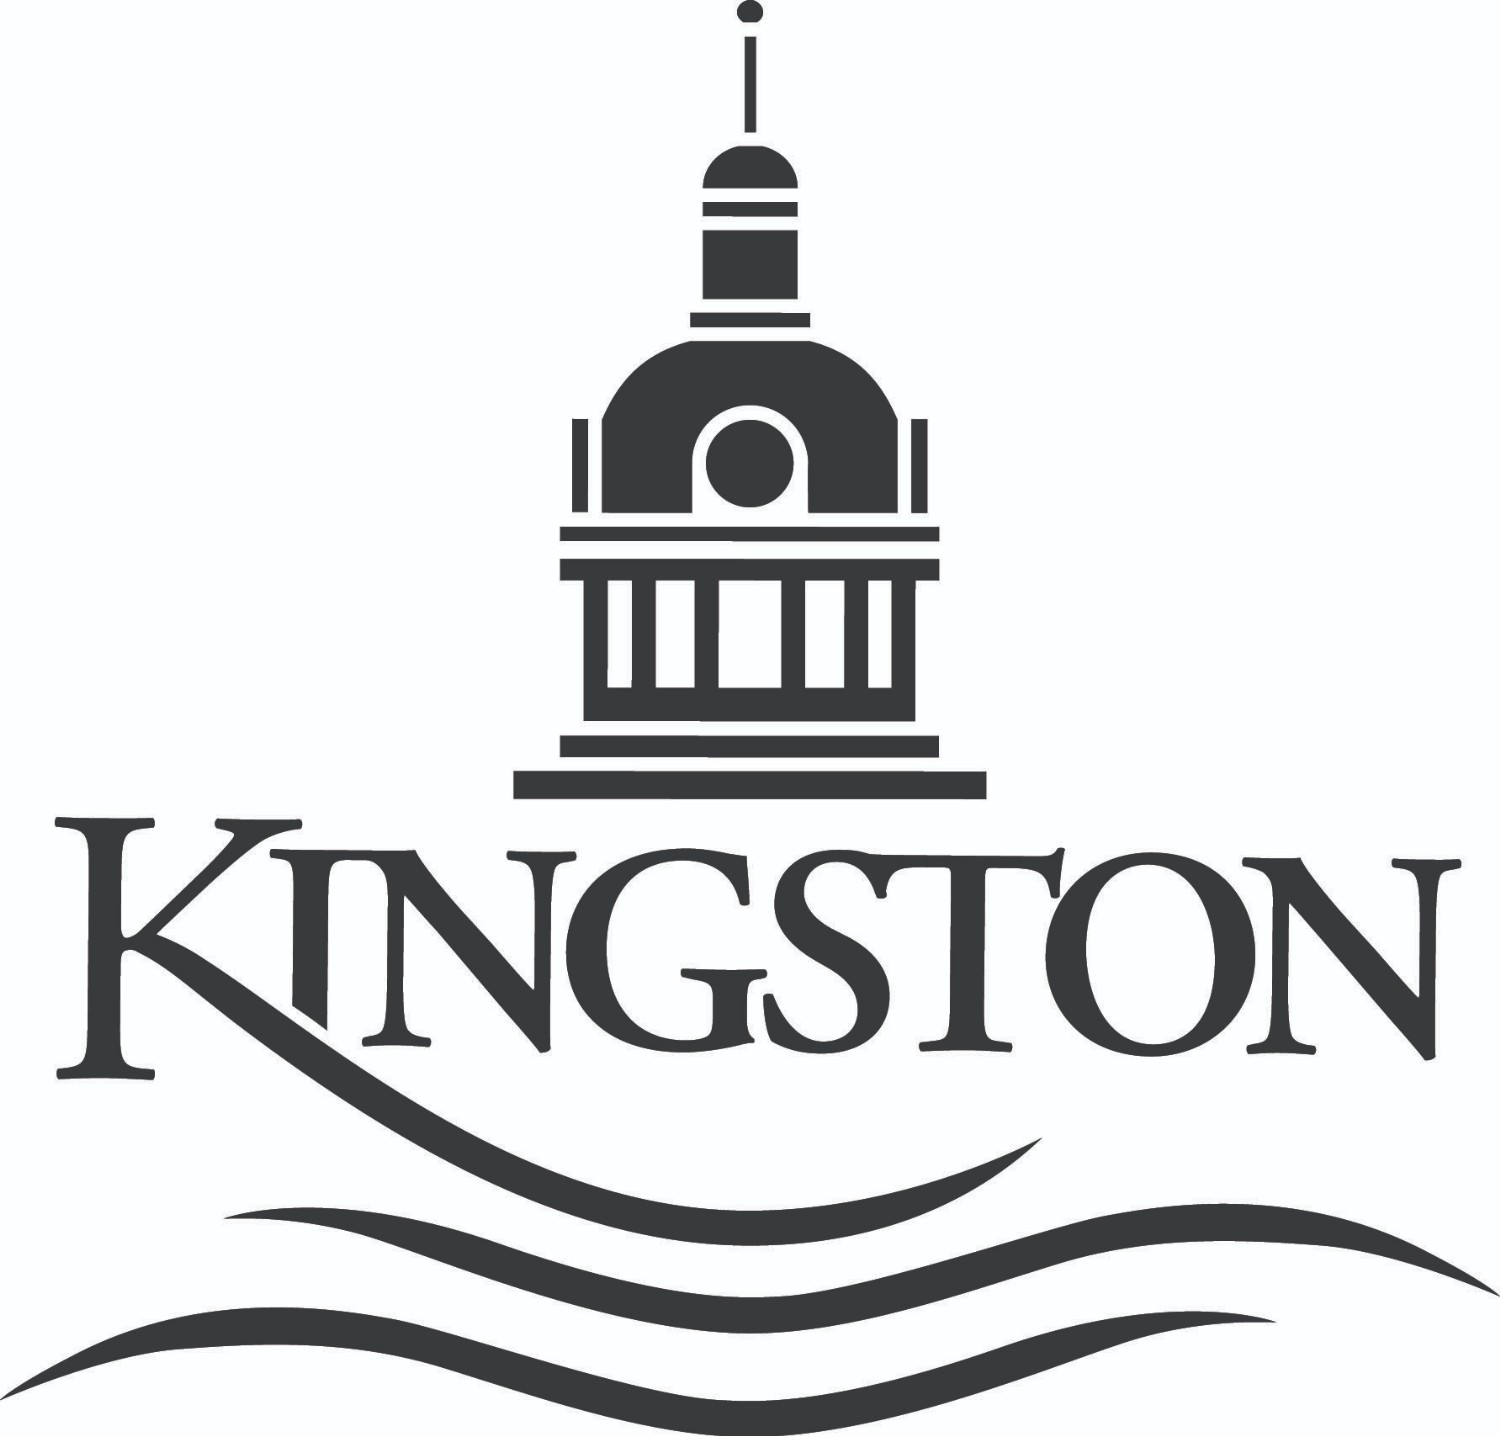 City of Kingston logo